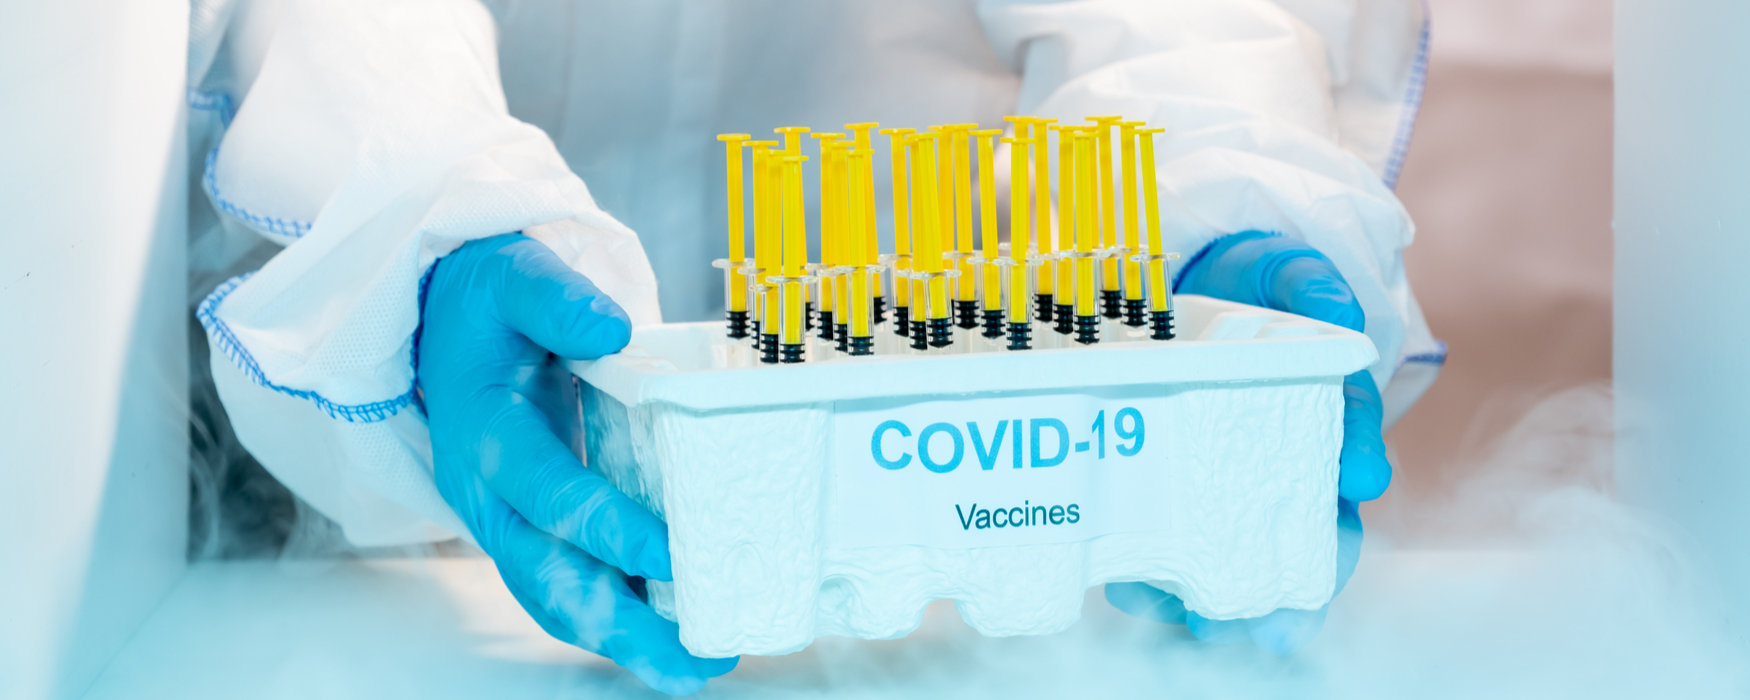 Montana covid vaccine freezers - covid 19 vaccine freezer - vaccine storage in Montana